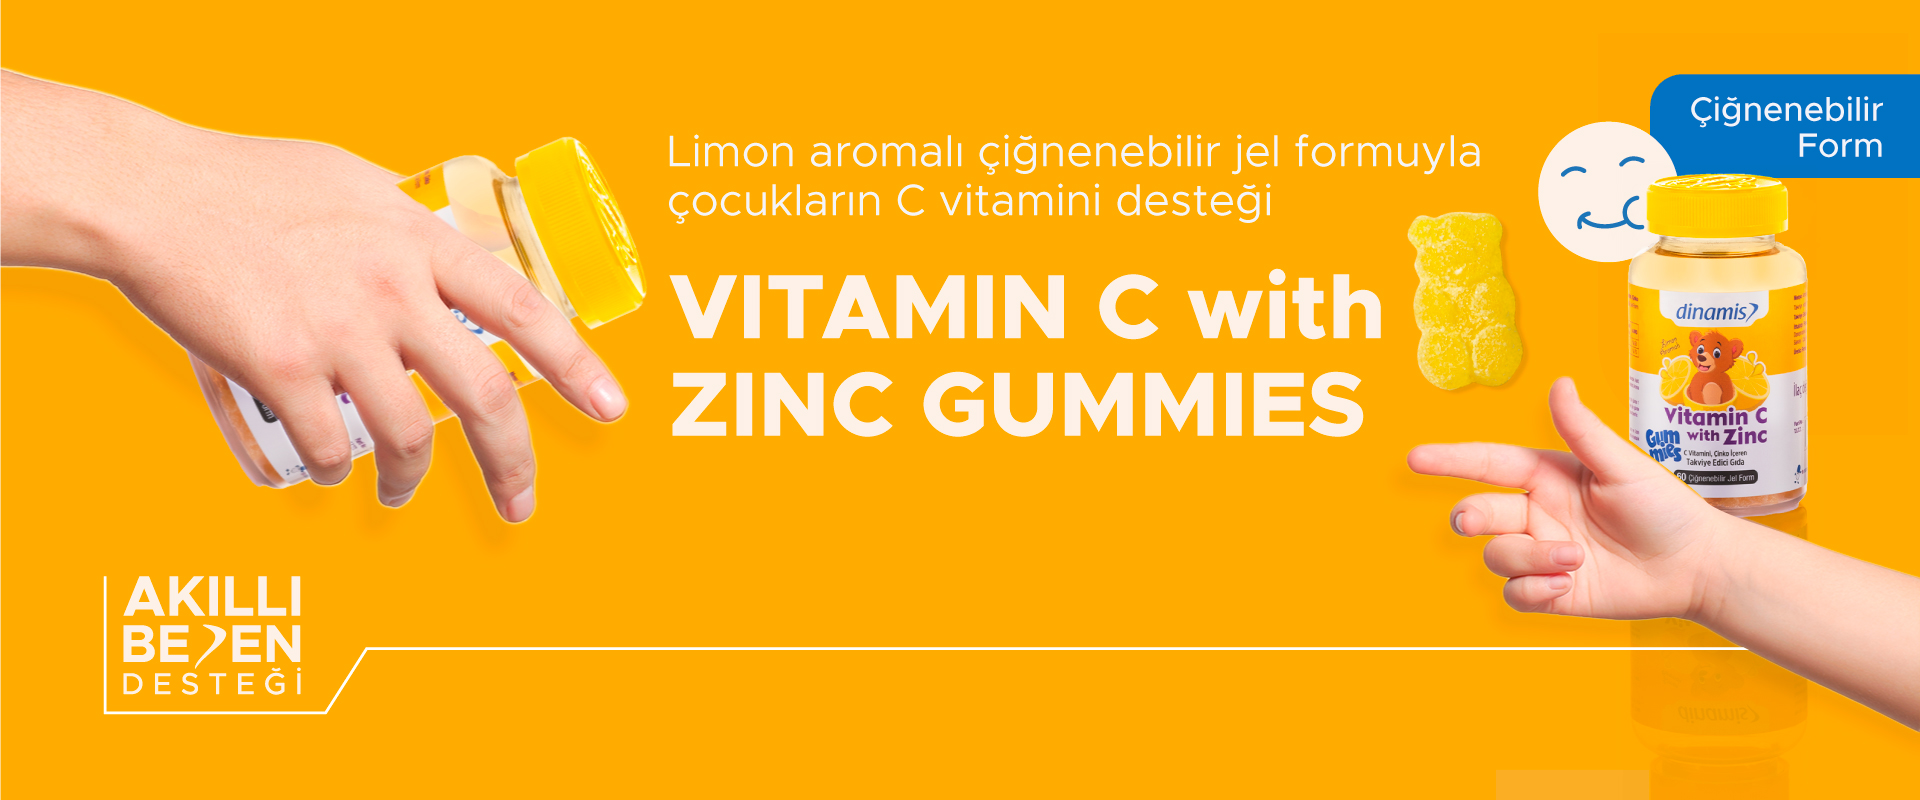 Dinamis Urunsayfasislider Vitamin Mineraller 12